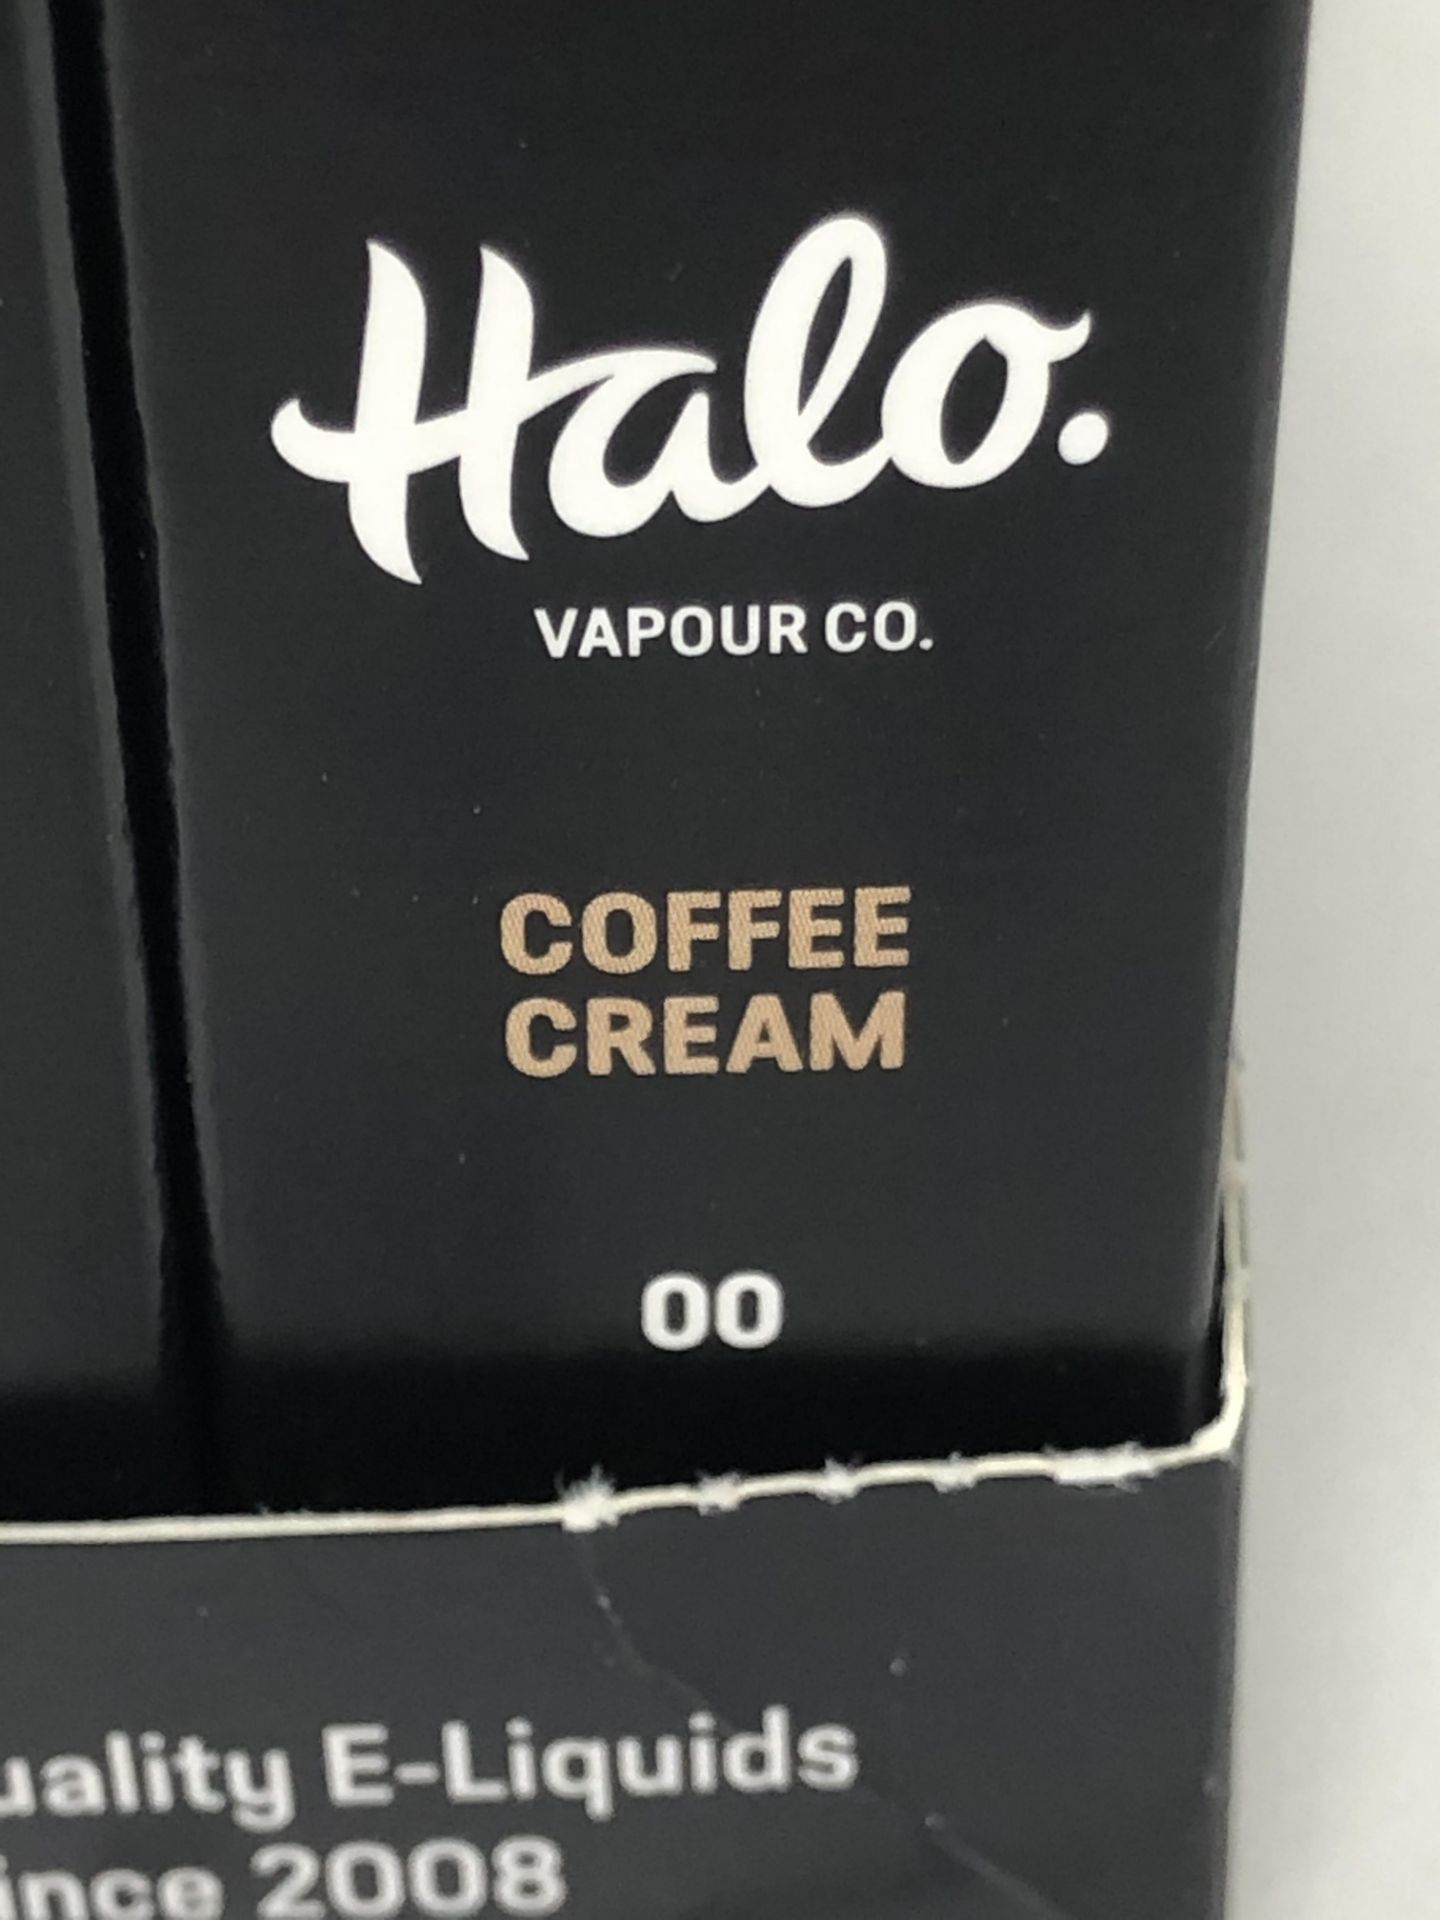 10 x Vapour co Coffee cream Halo BNIB - 10 ml - nicotine free |96136676 - Image 7 of 7